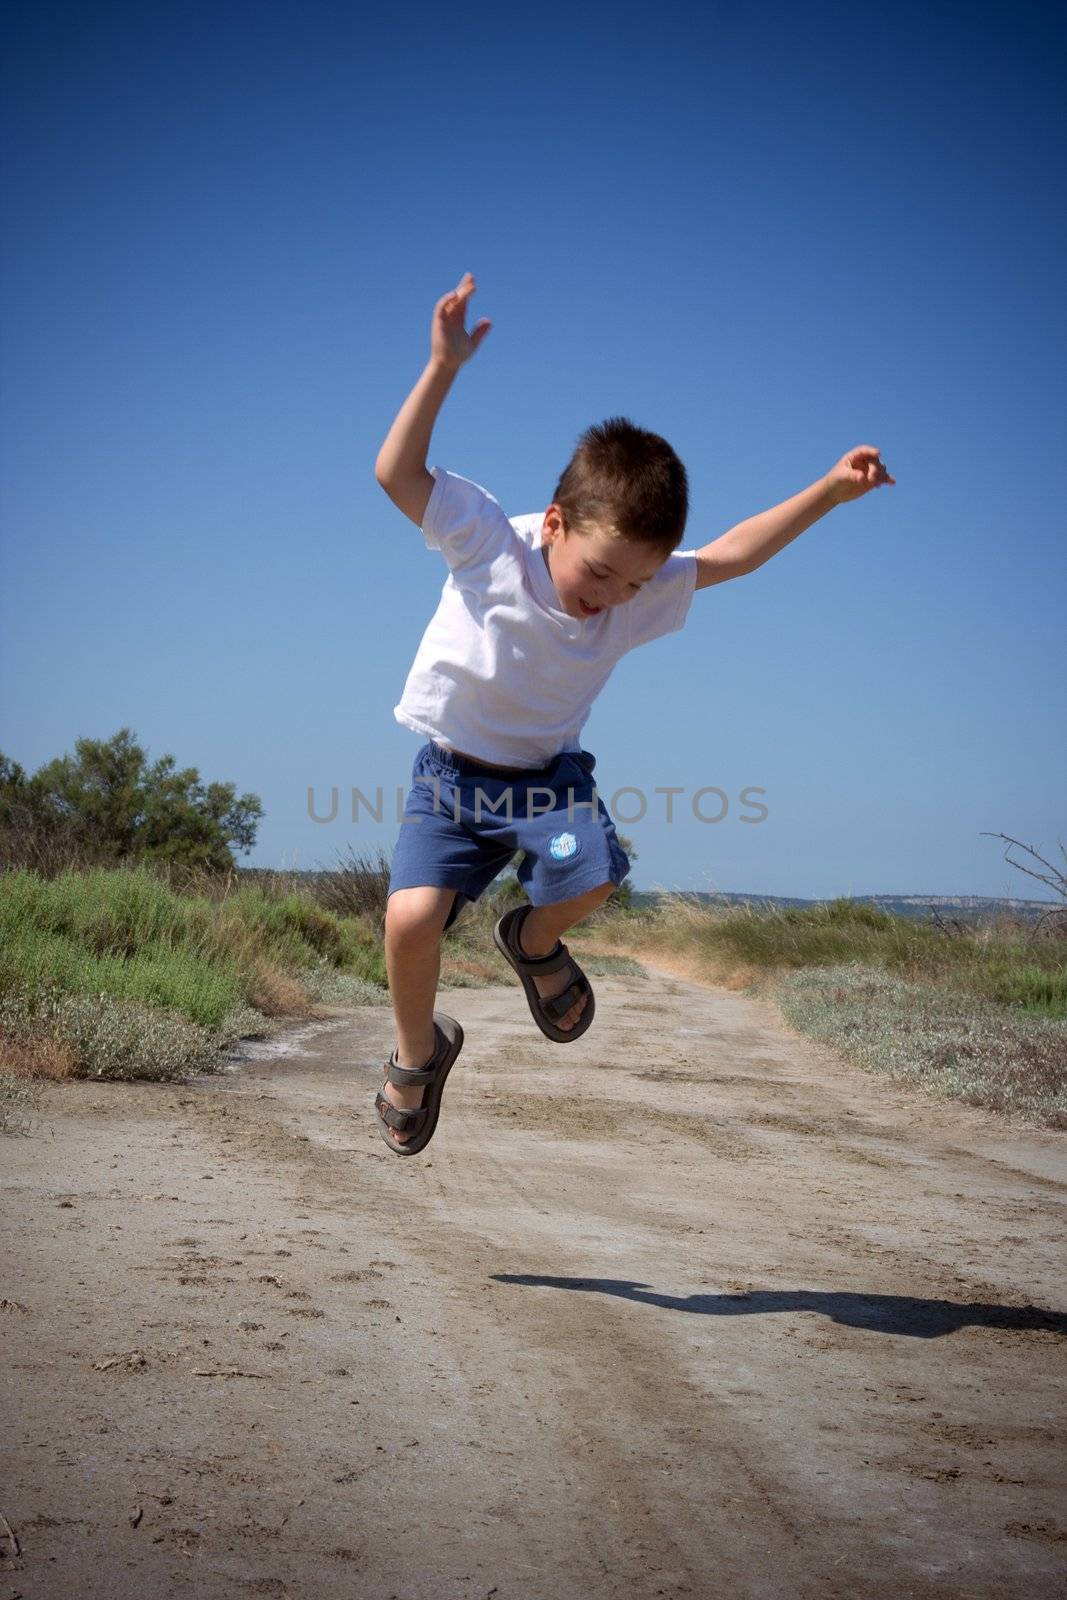 happy jumping child by chrisroll